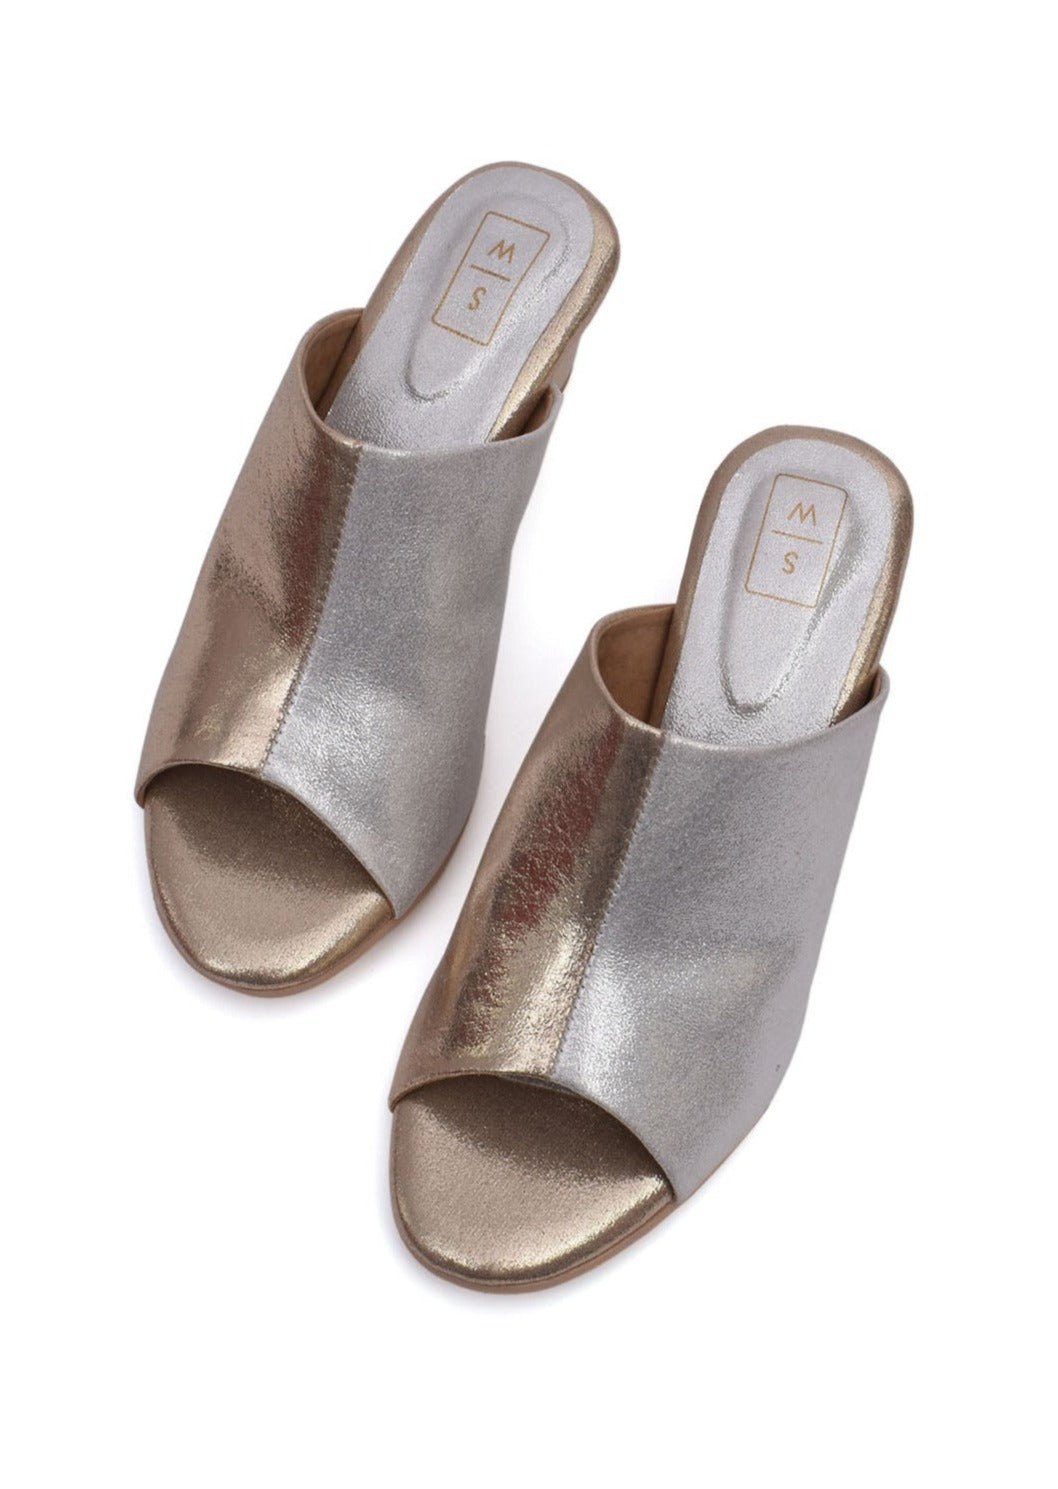 Lyla Gold & Silver Heel Sandals